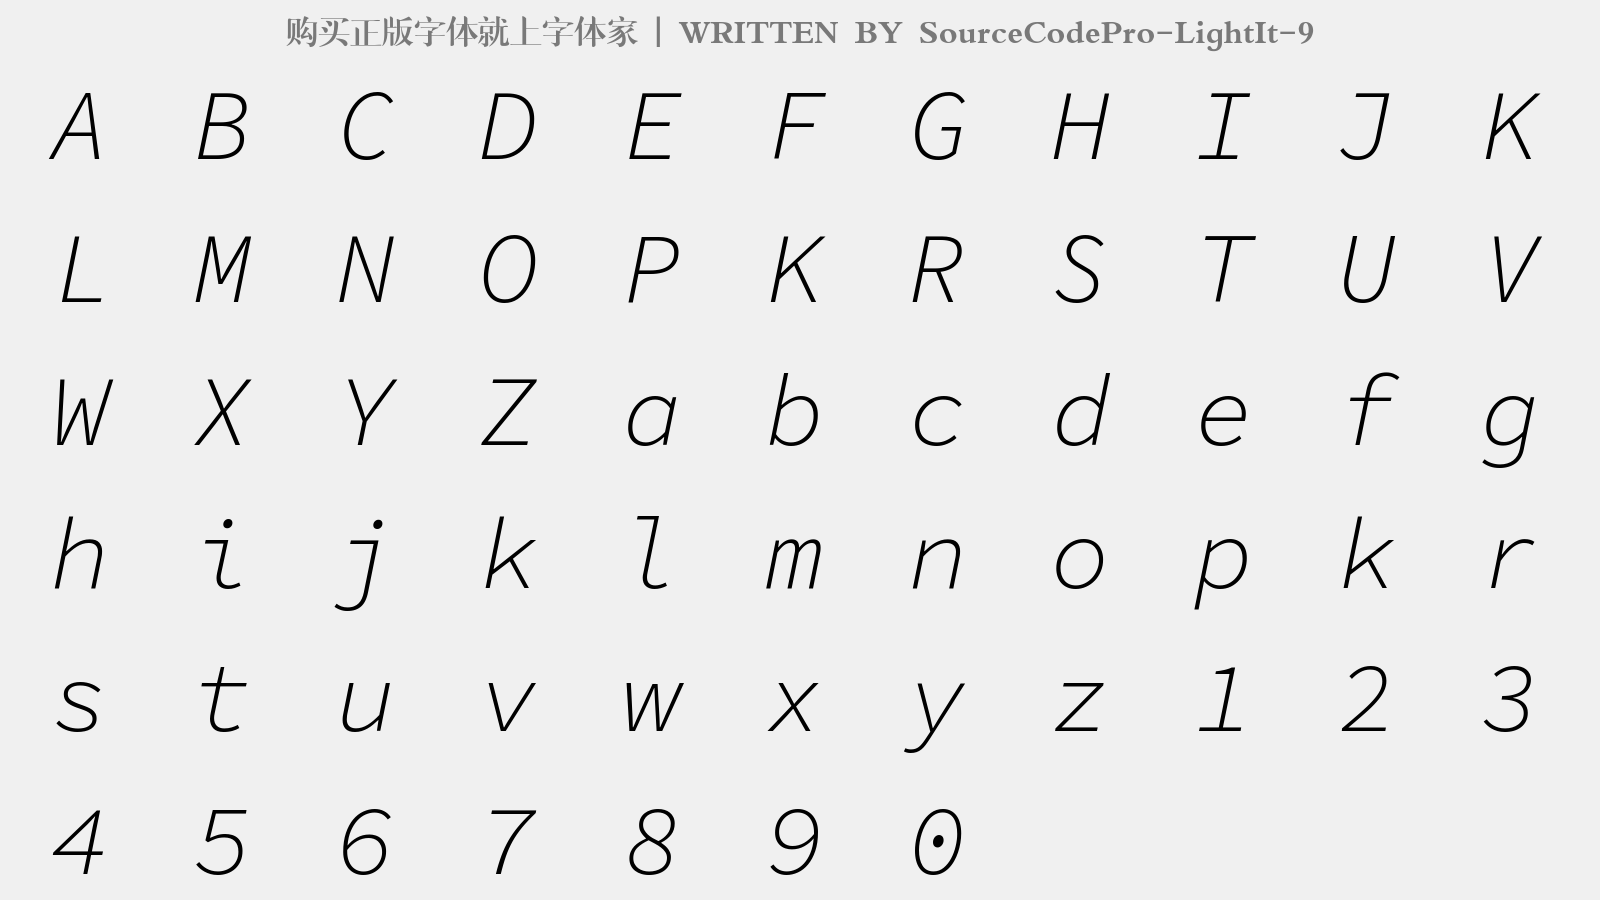 SourceCodePro-LightIt-9 - 大写字母/小写字母/数字